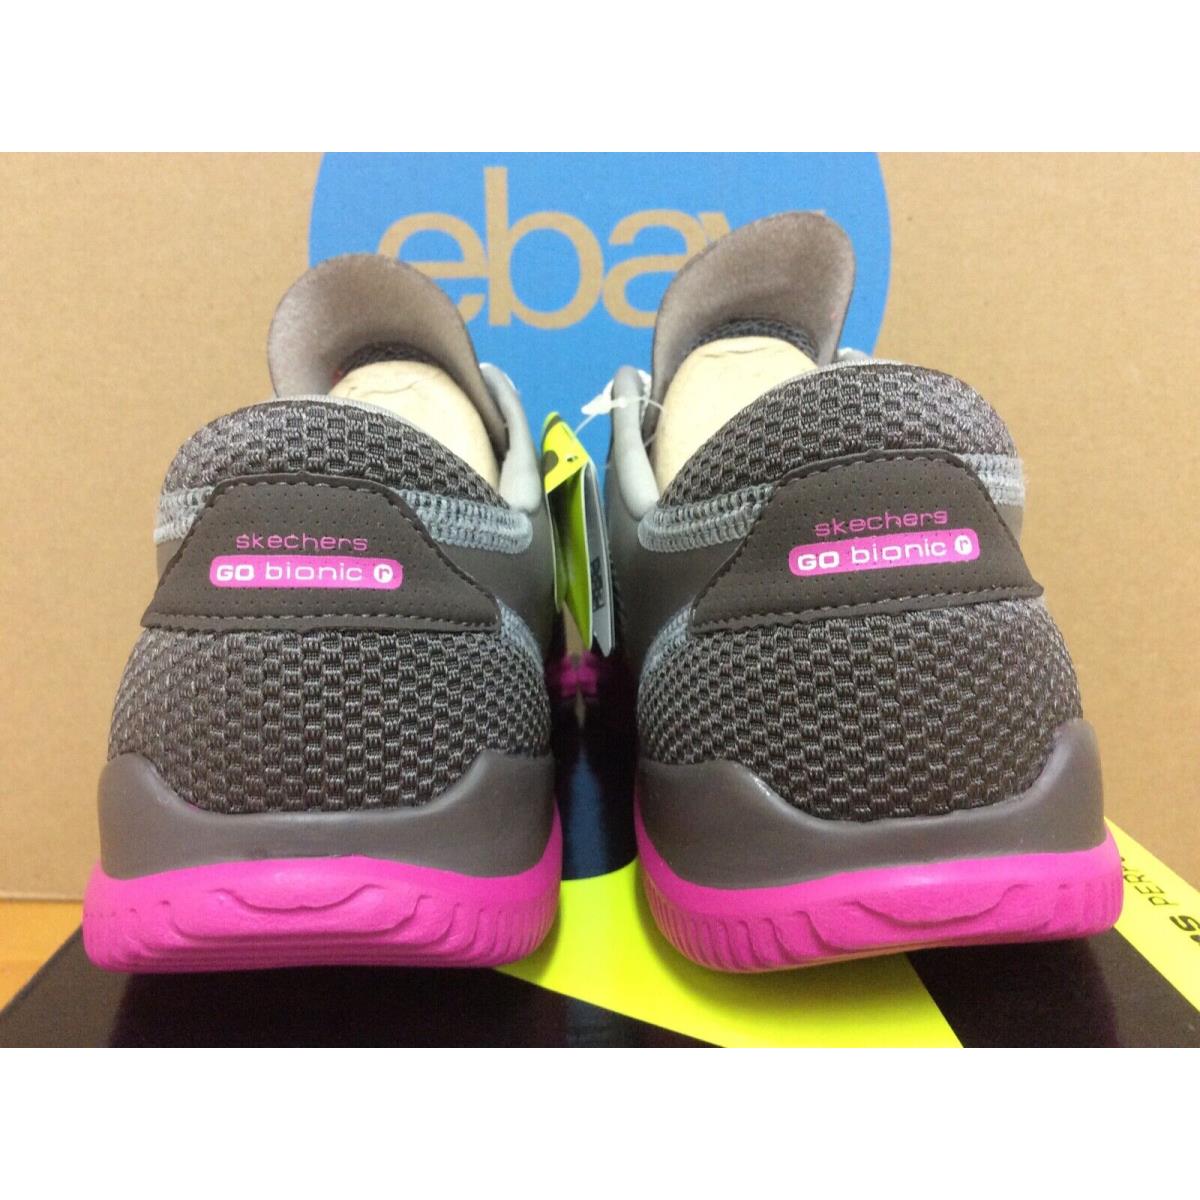 Skechers shoes Bionic Ride - Charcoal Hot Pink 2